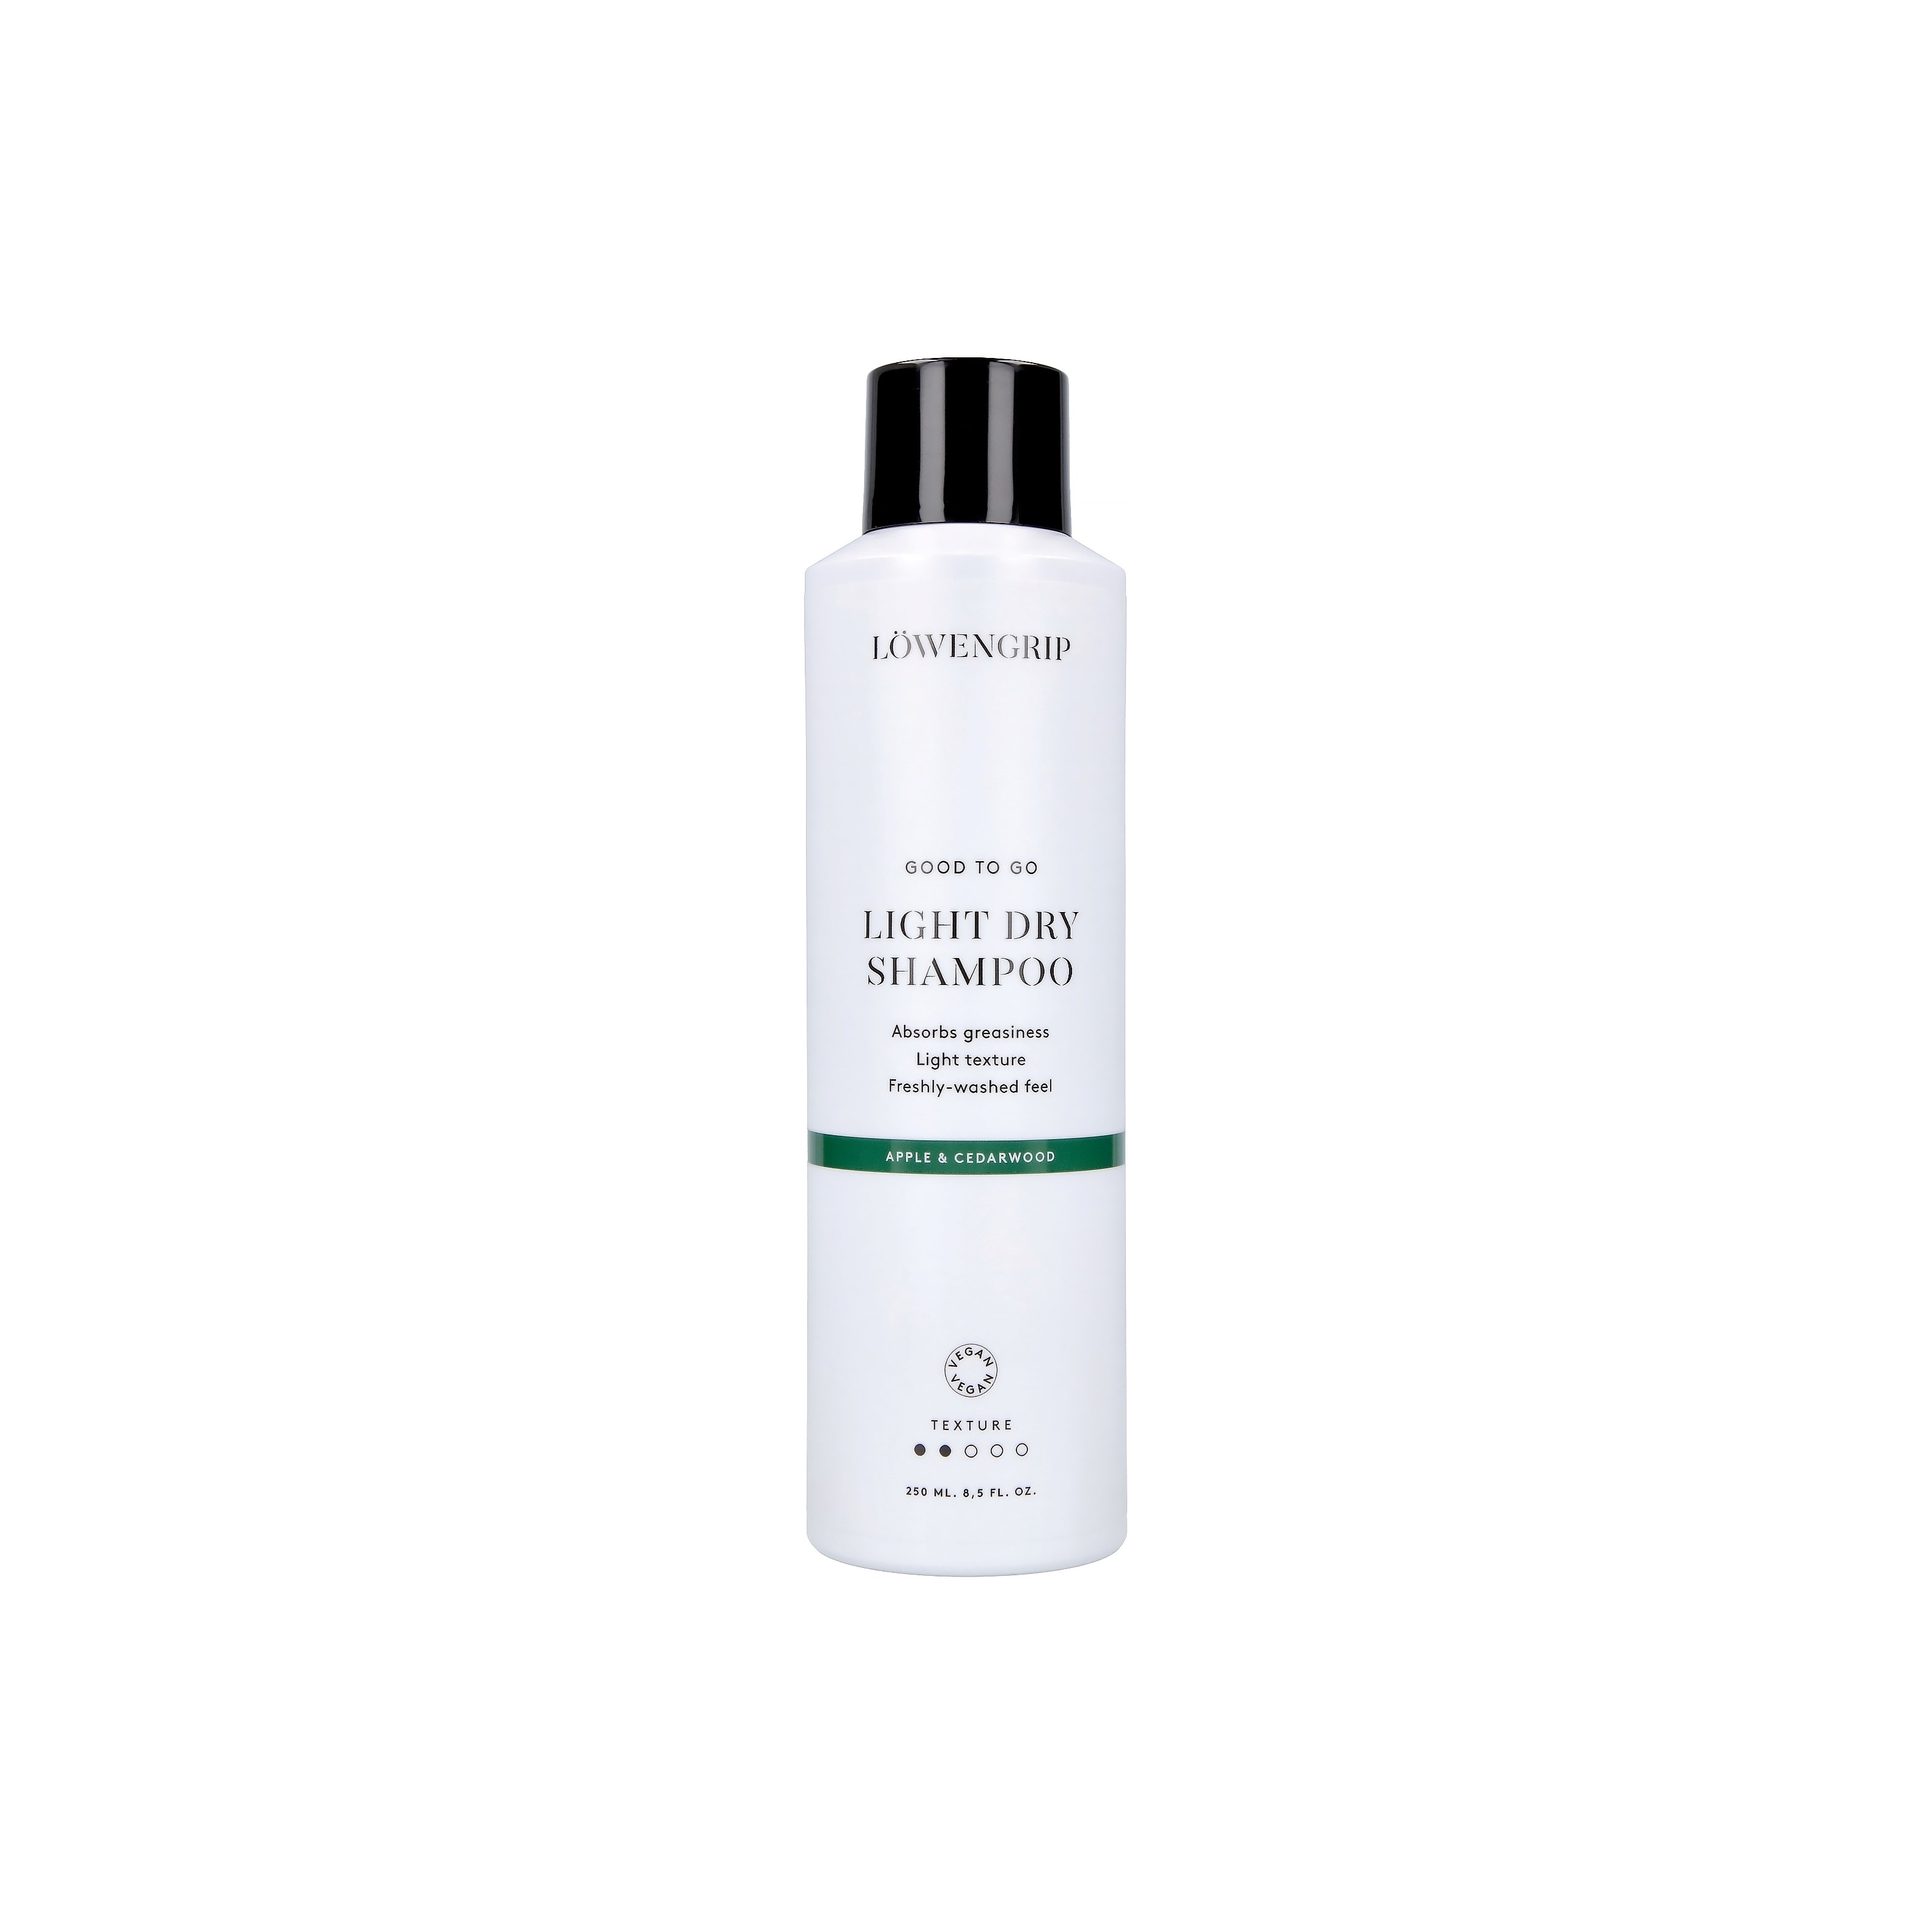 Läs mer om Löwengrip Hair Styling Good To Go Light (apple & cedarwood) Dry Shampo